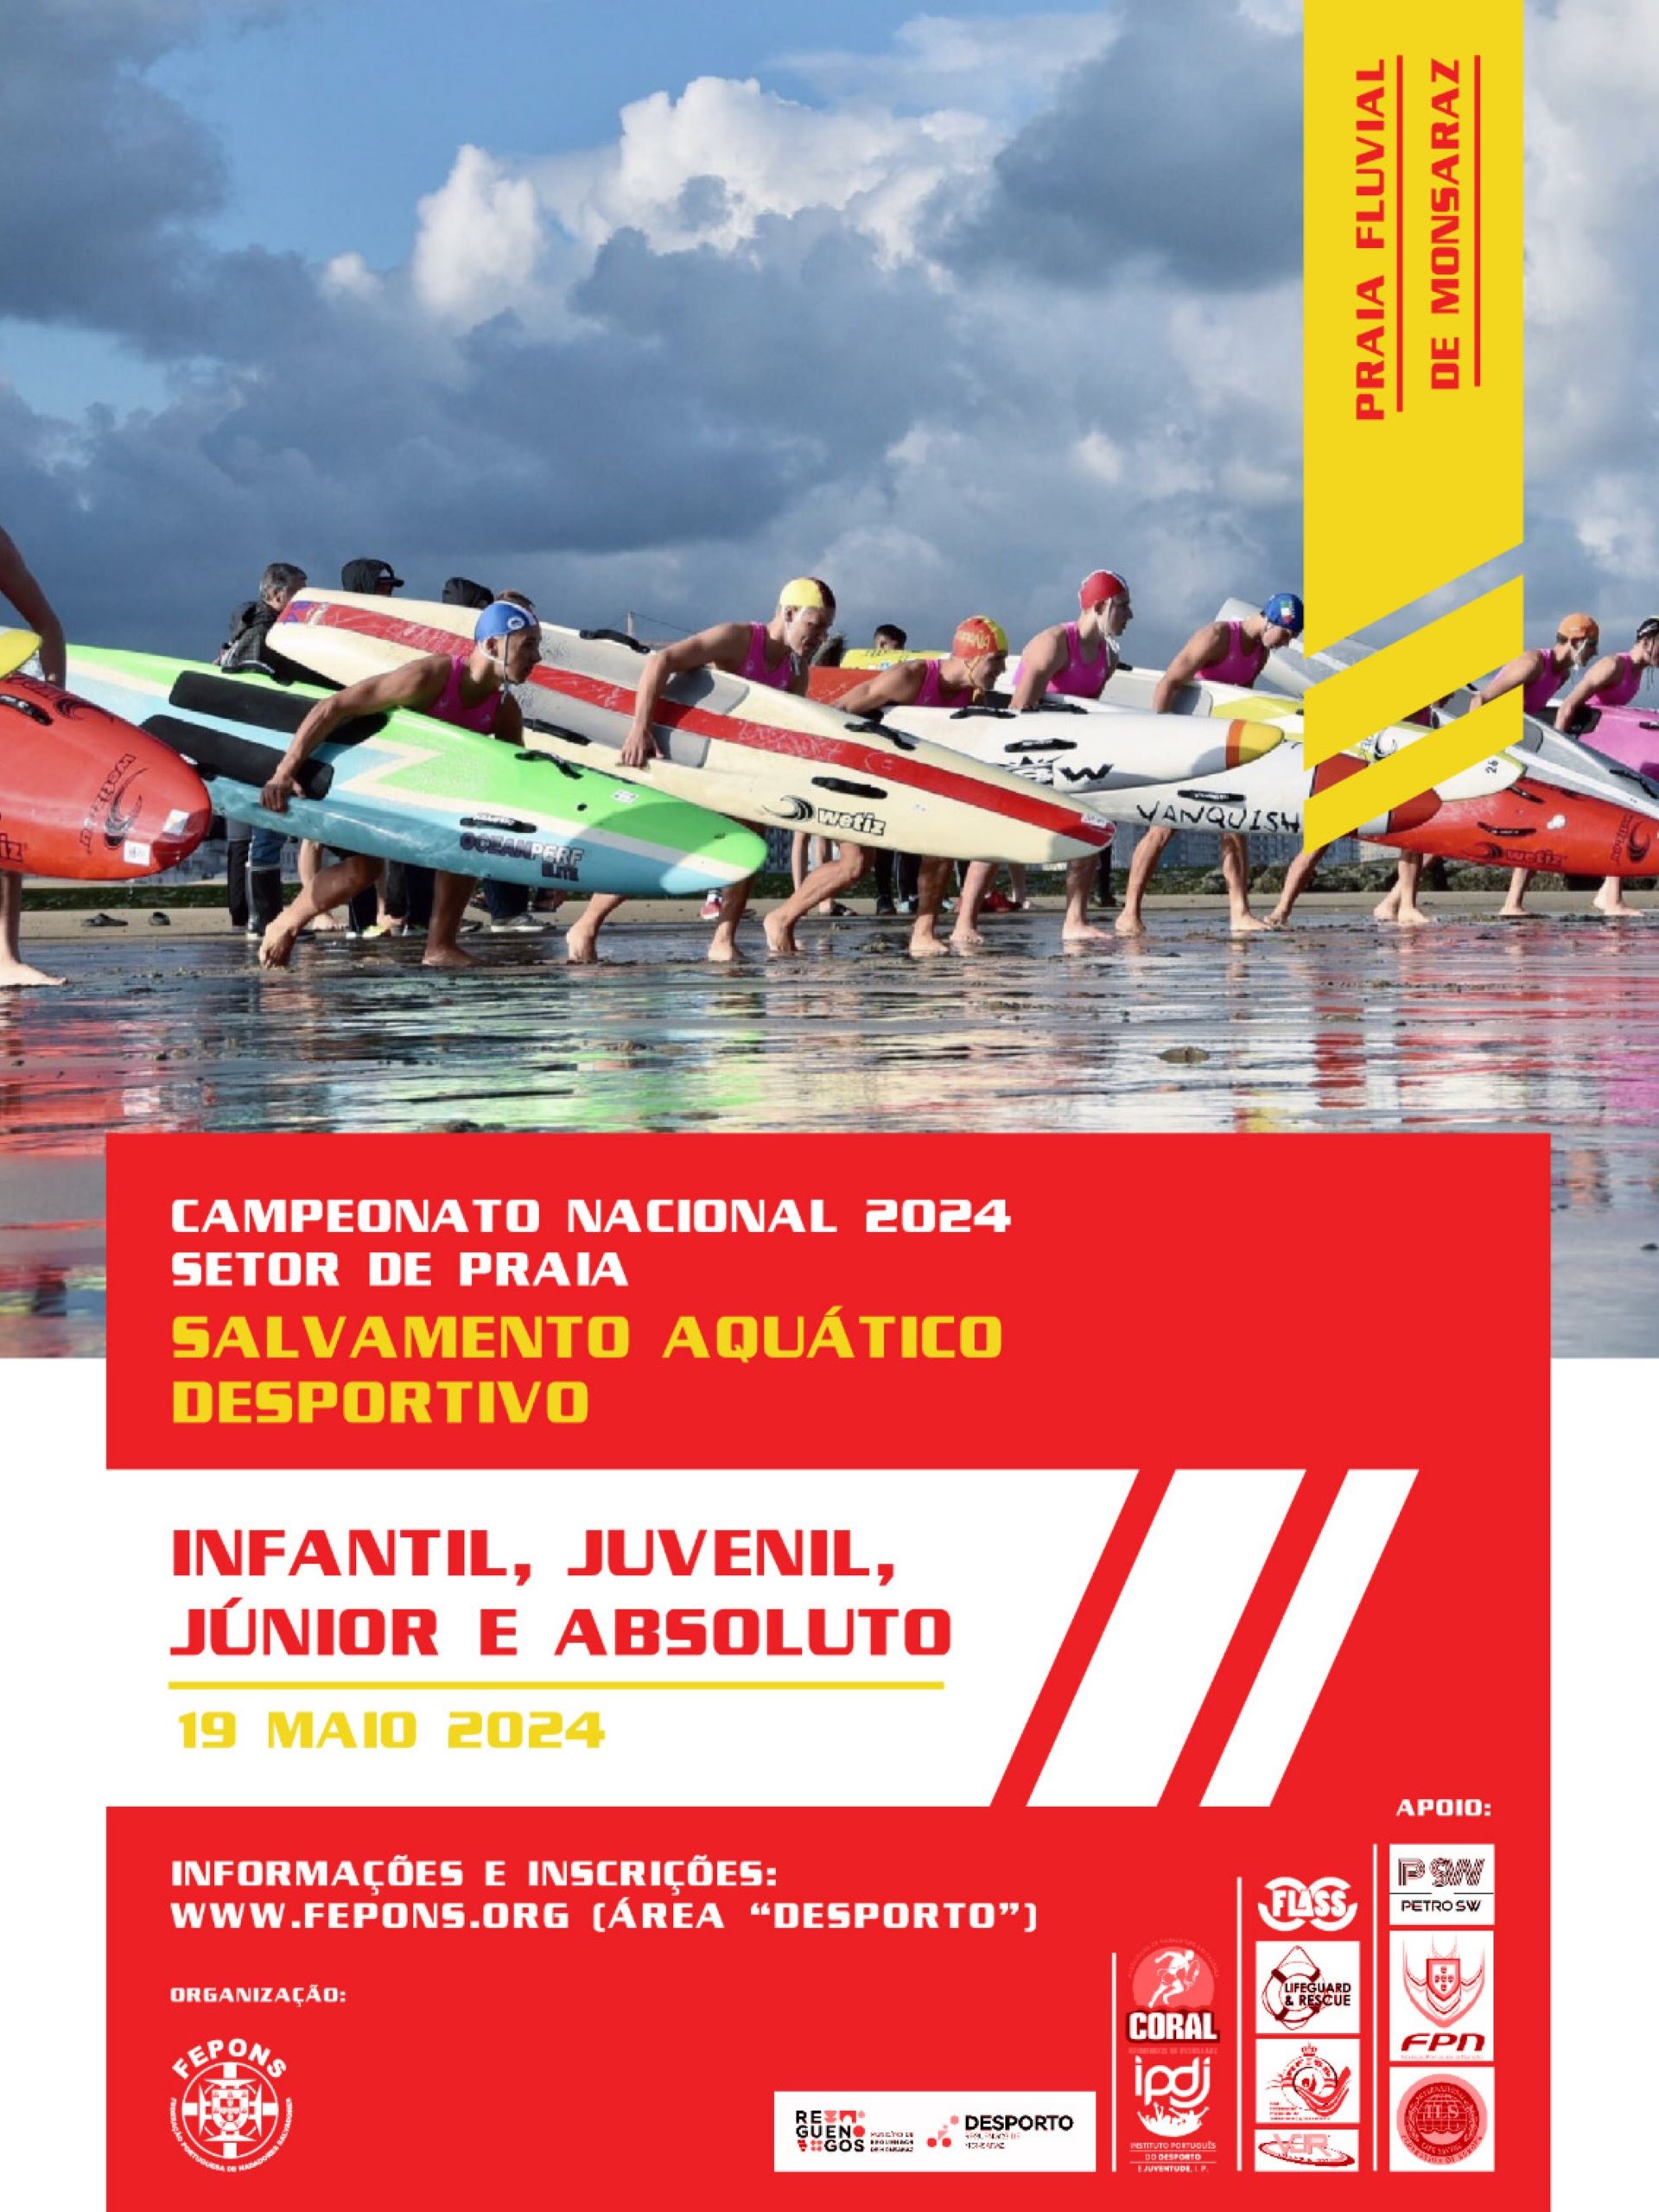 Campeonato Nacional 2024 de Salvamento Aquático Desportivo na Praia Fluvial de Monsaraz